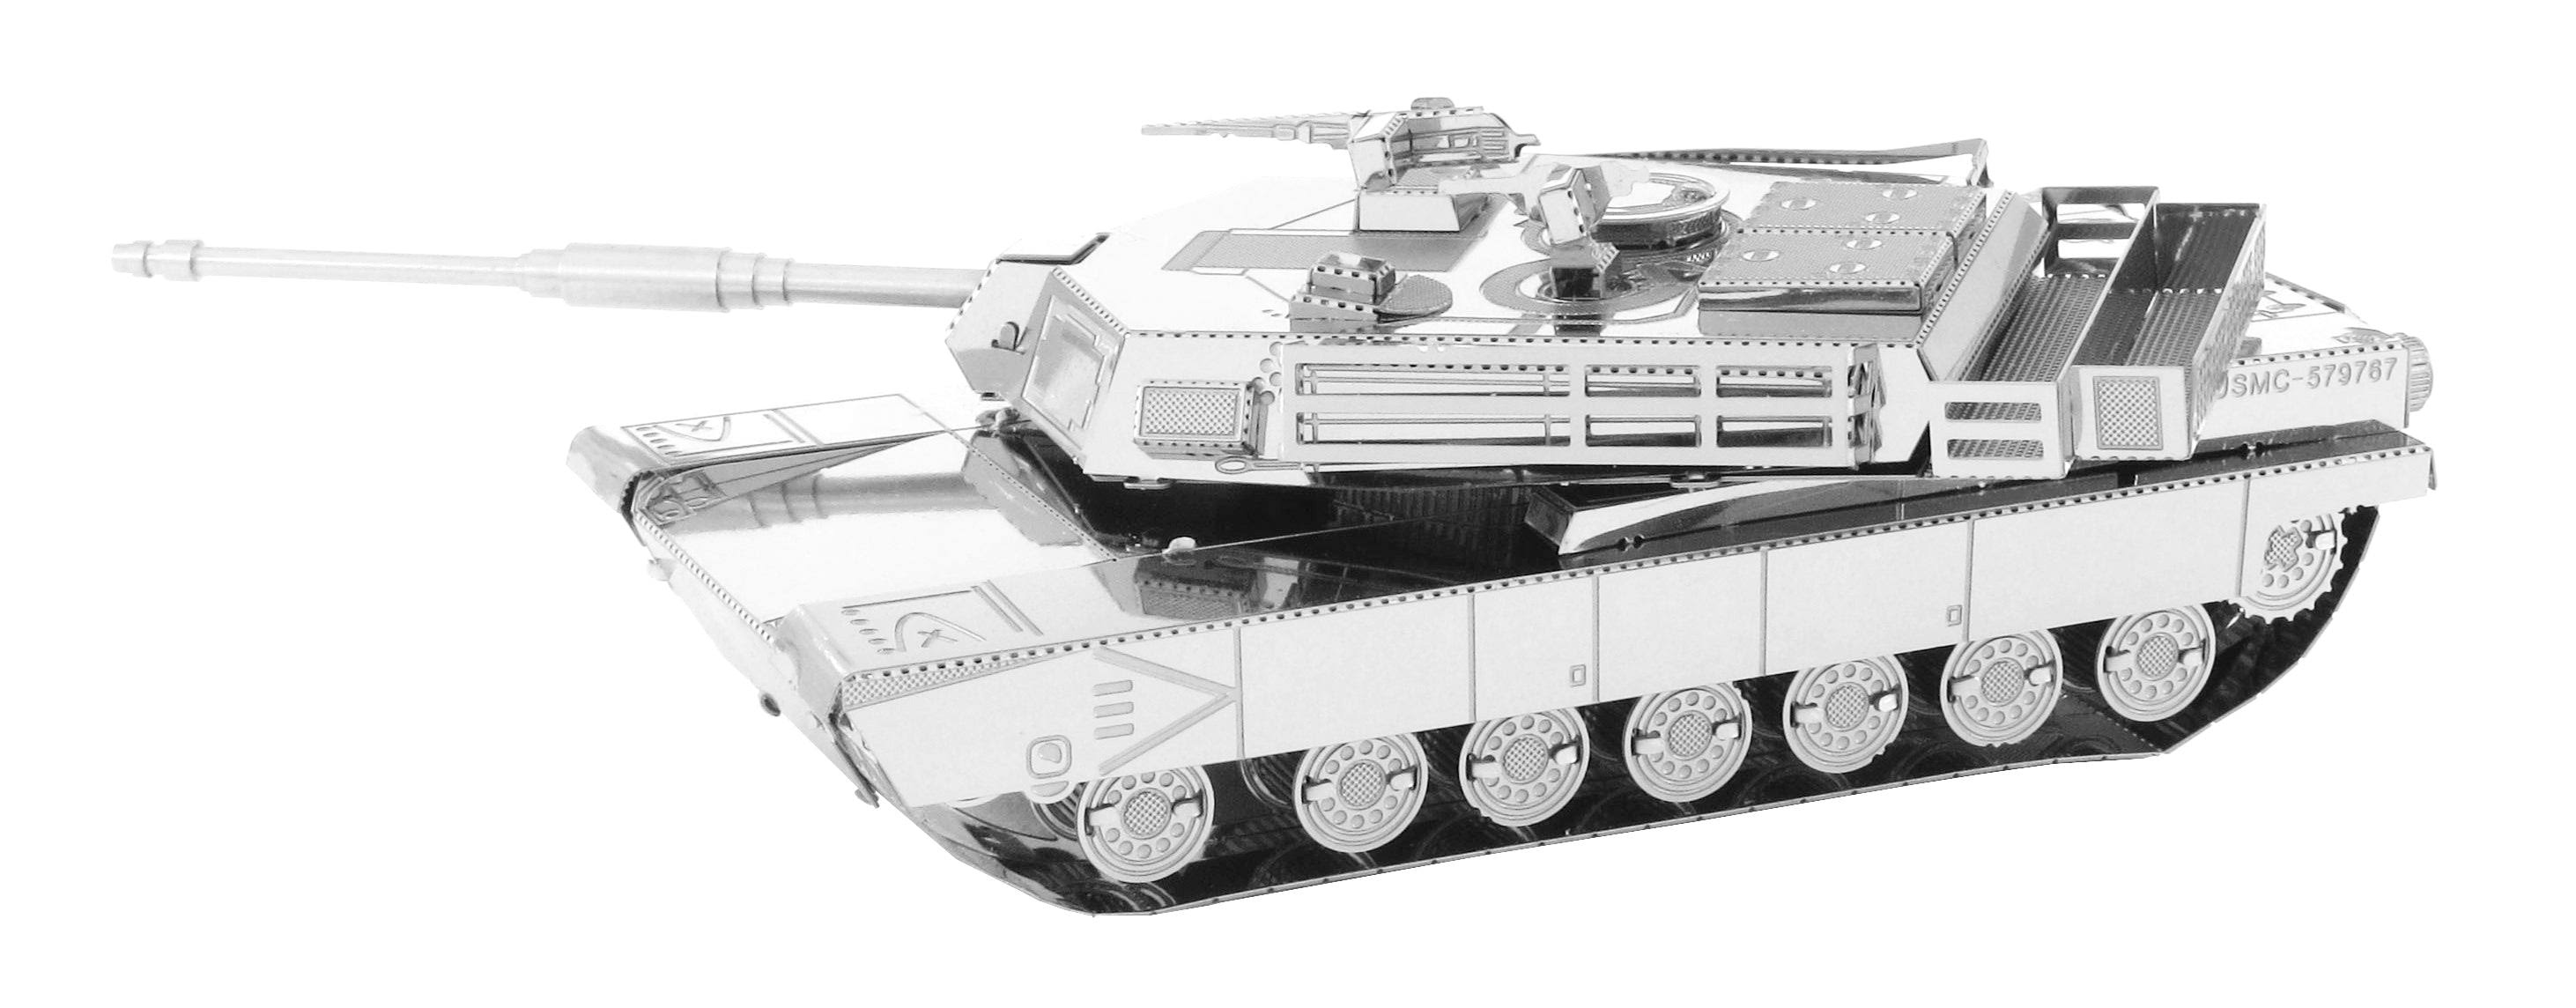 Metal Earth - 3D Metal Model Kit - M1 Abrams Tank